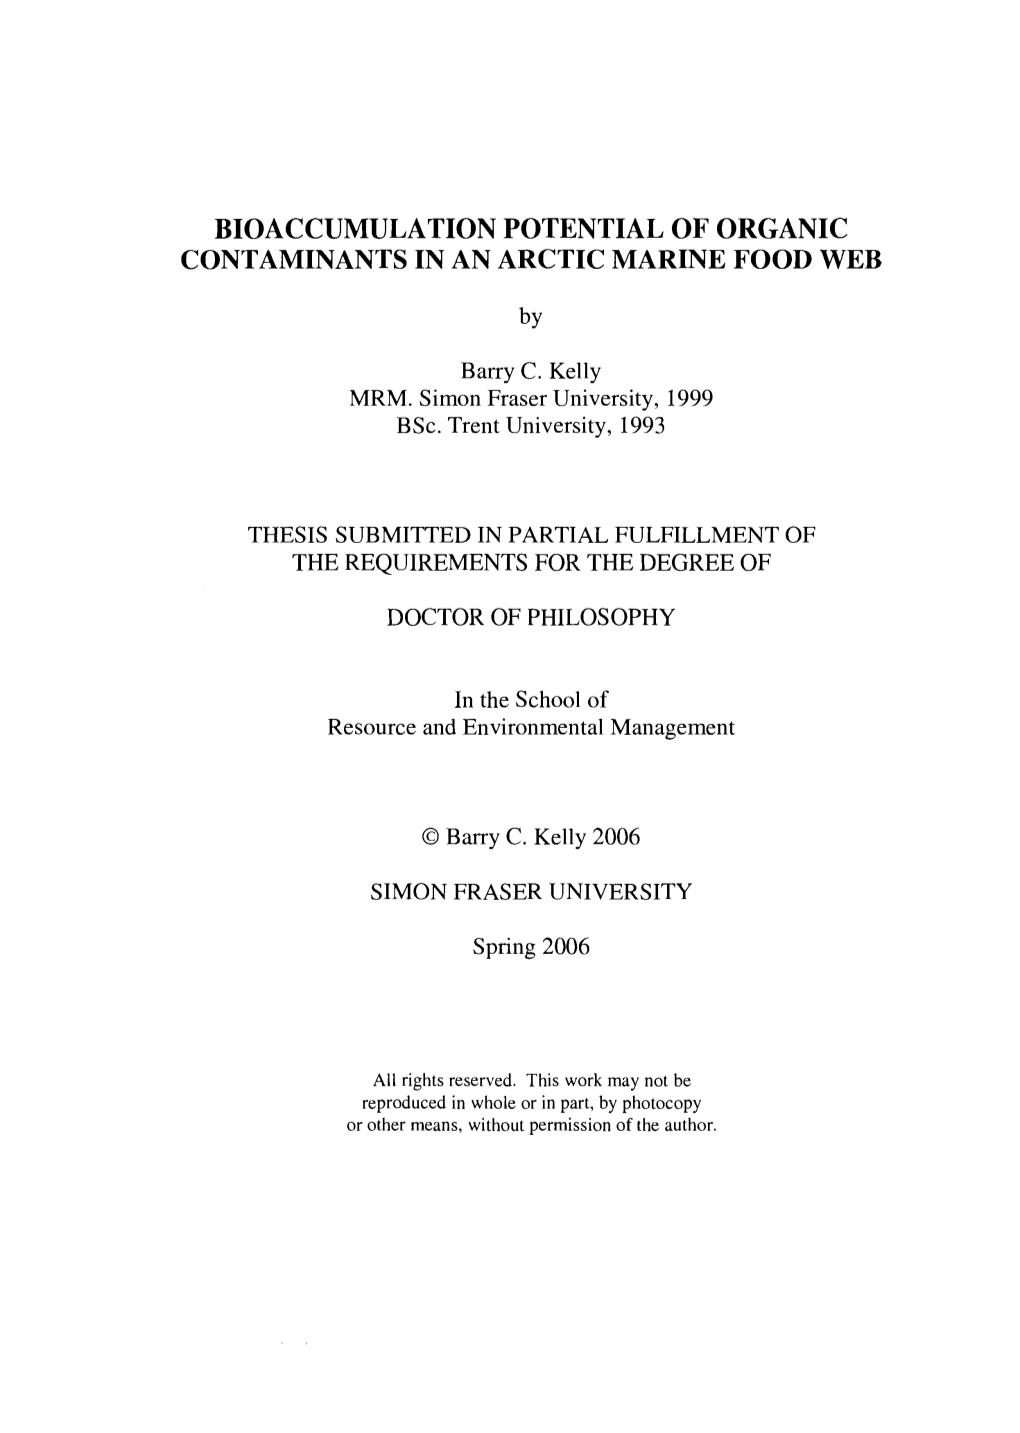 Bioaccumulation Potential of Organic Contaminants in an Arctic Marine Food Web